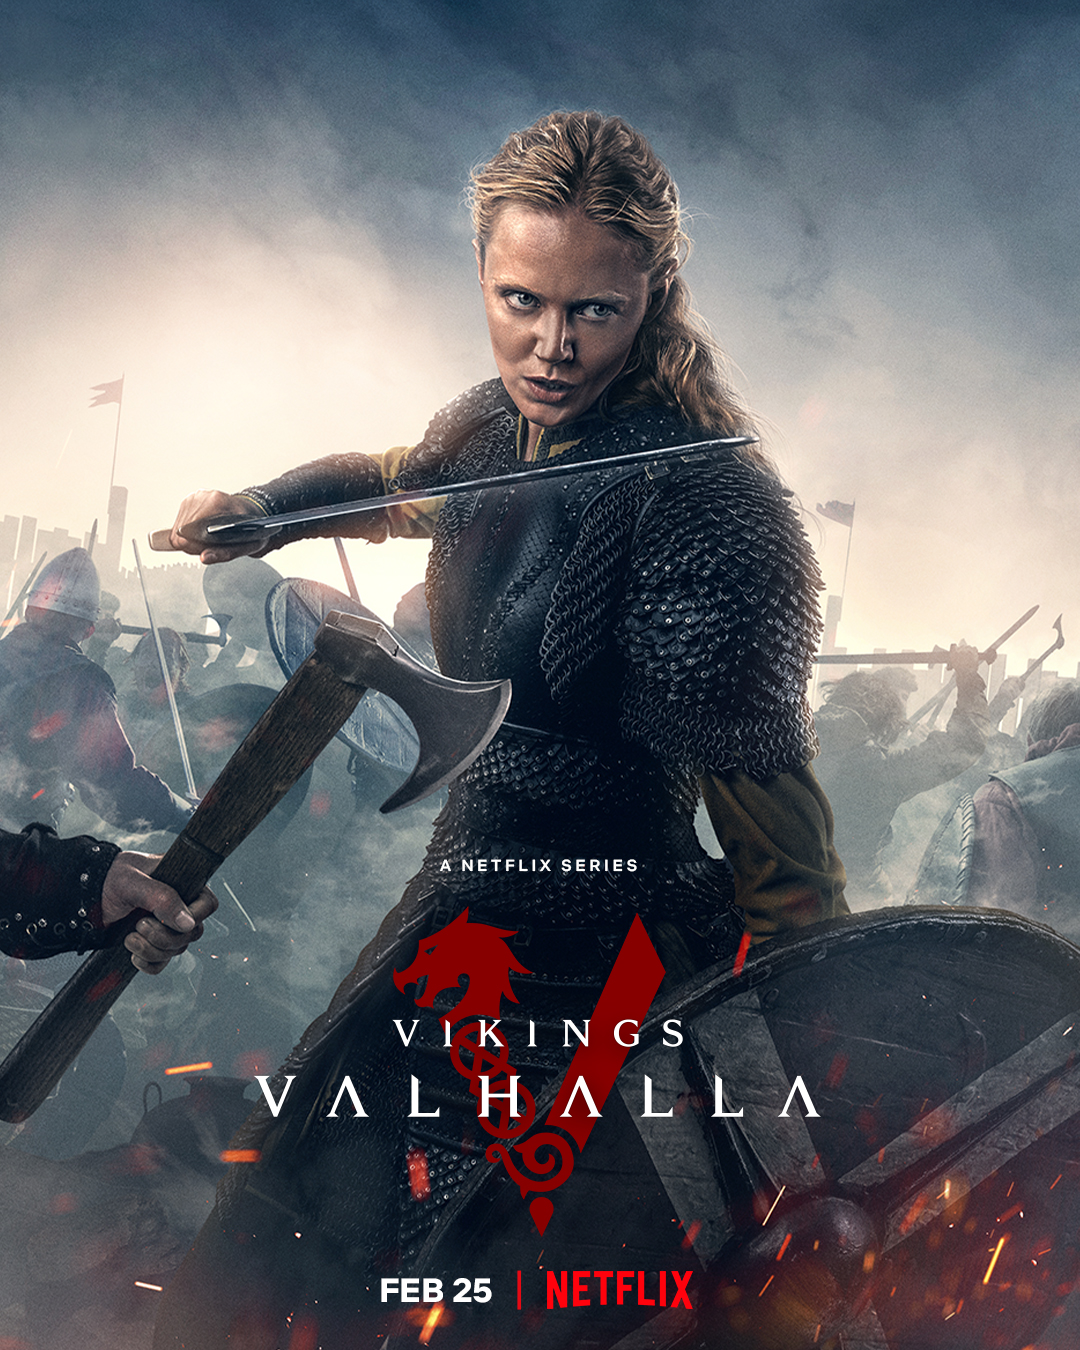 Frida Gustavsson In Vikings Valhalla Wallpapers